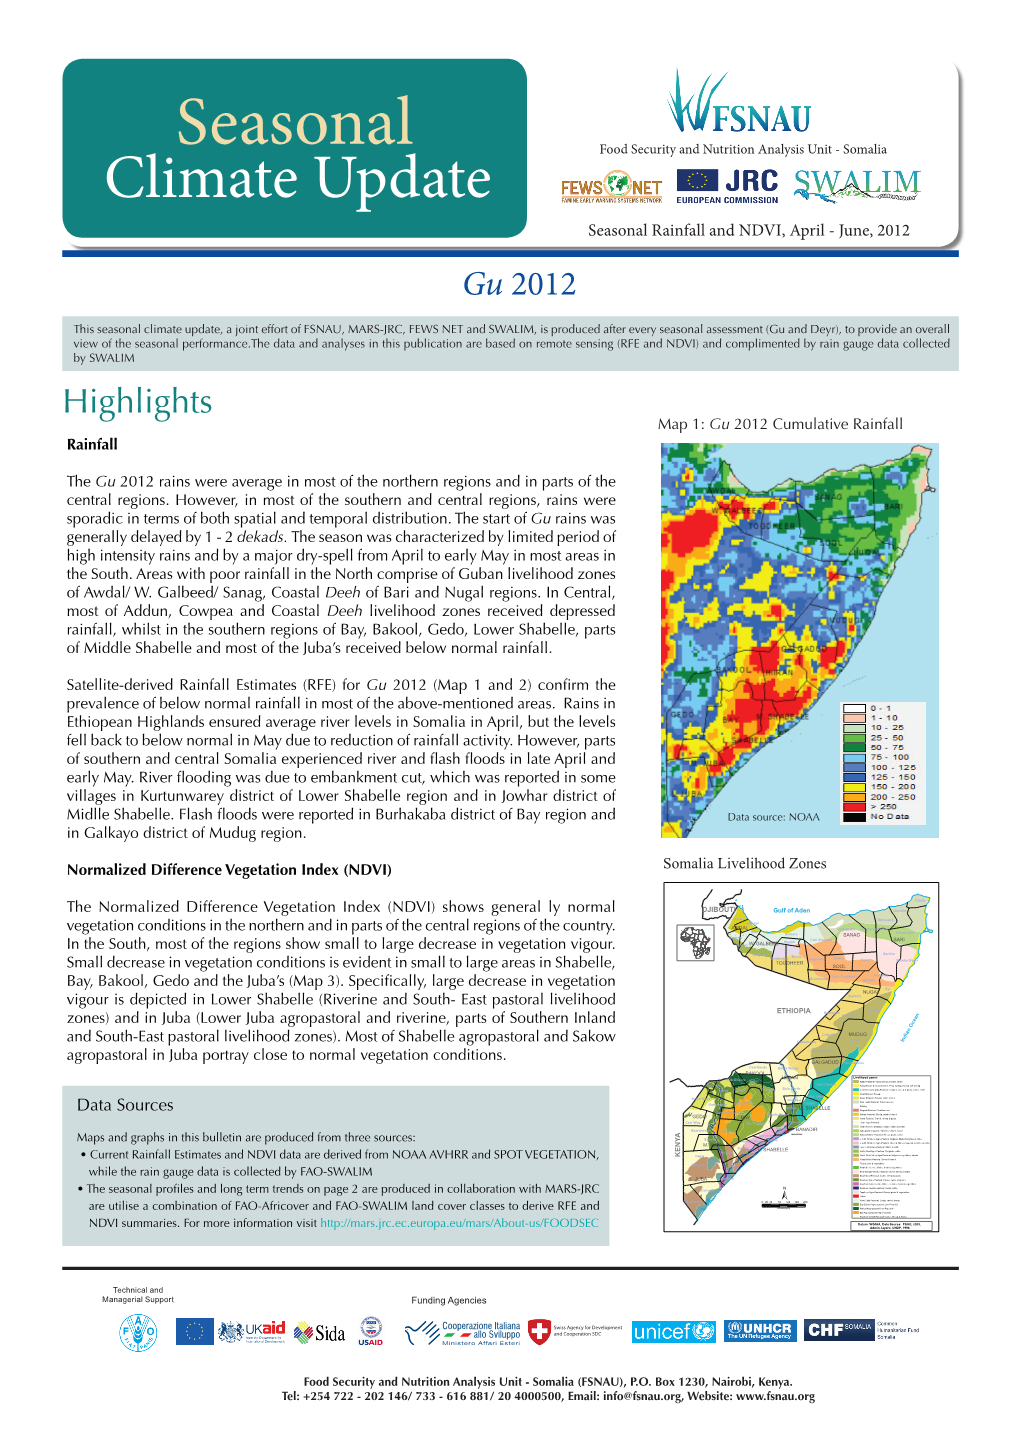 Seasonal Climate Data Update, Gu 2012